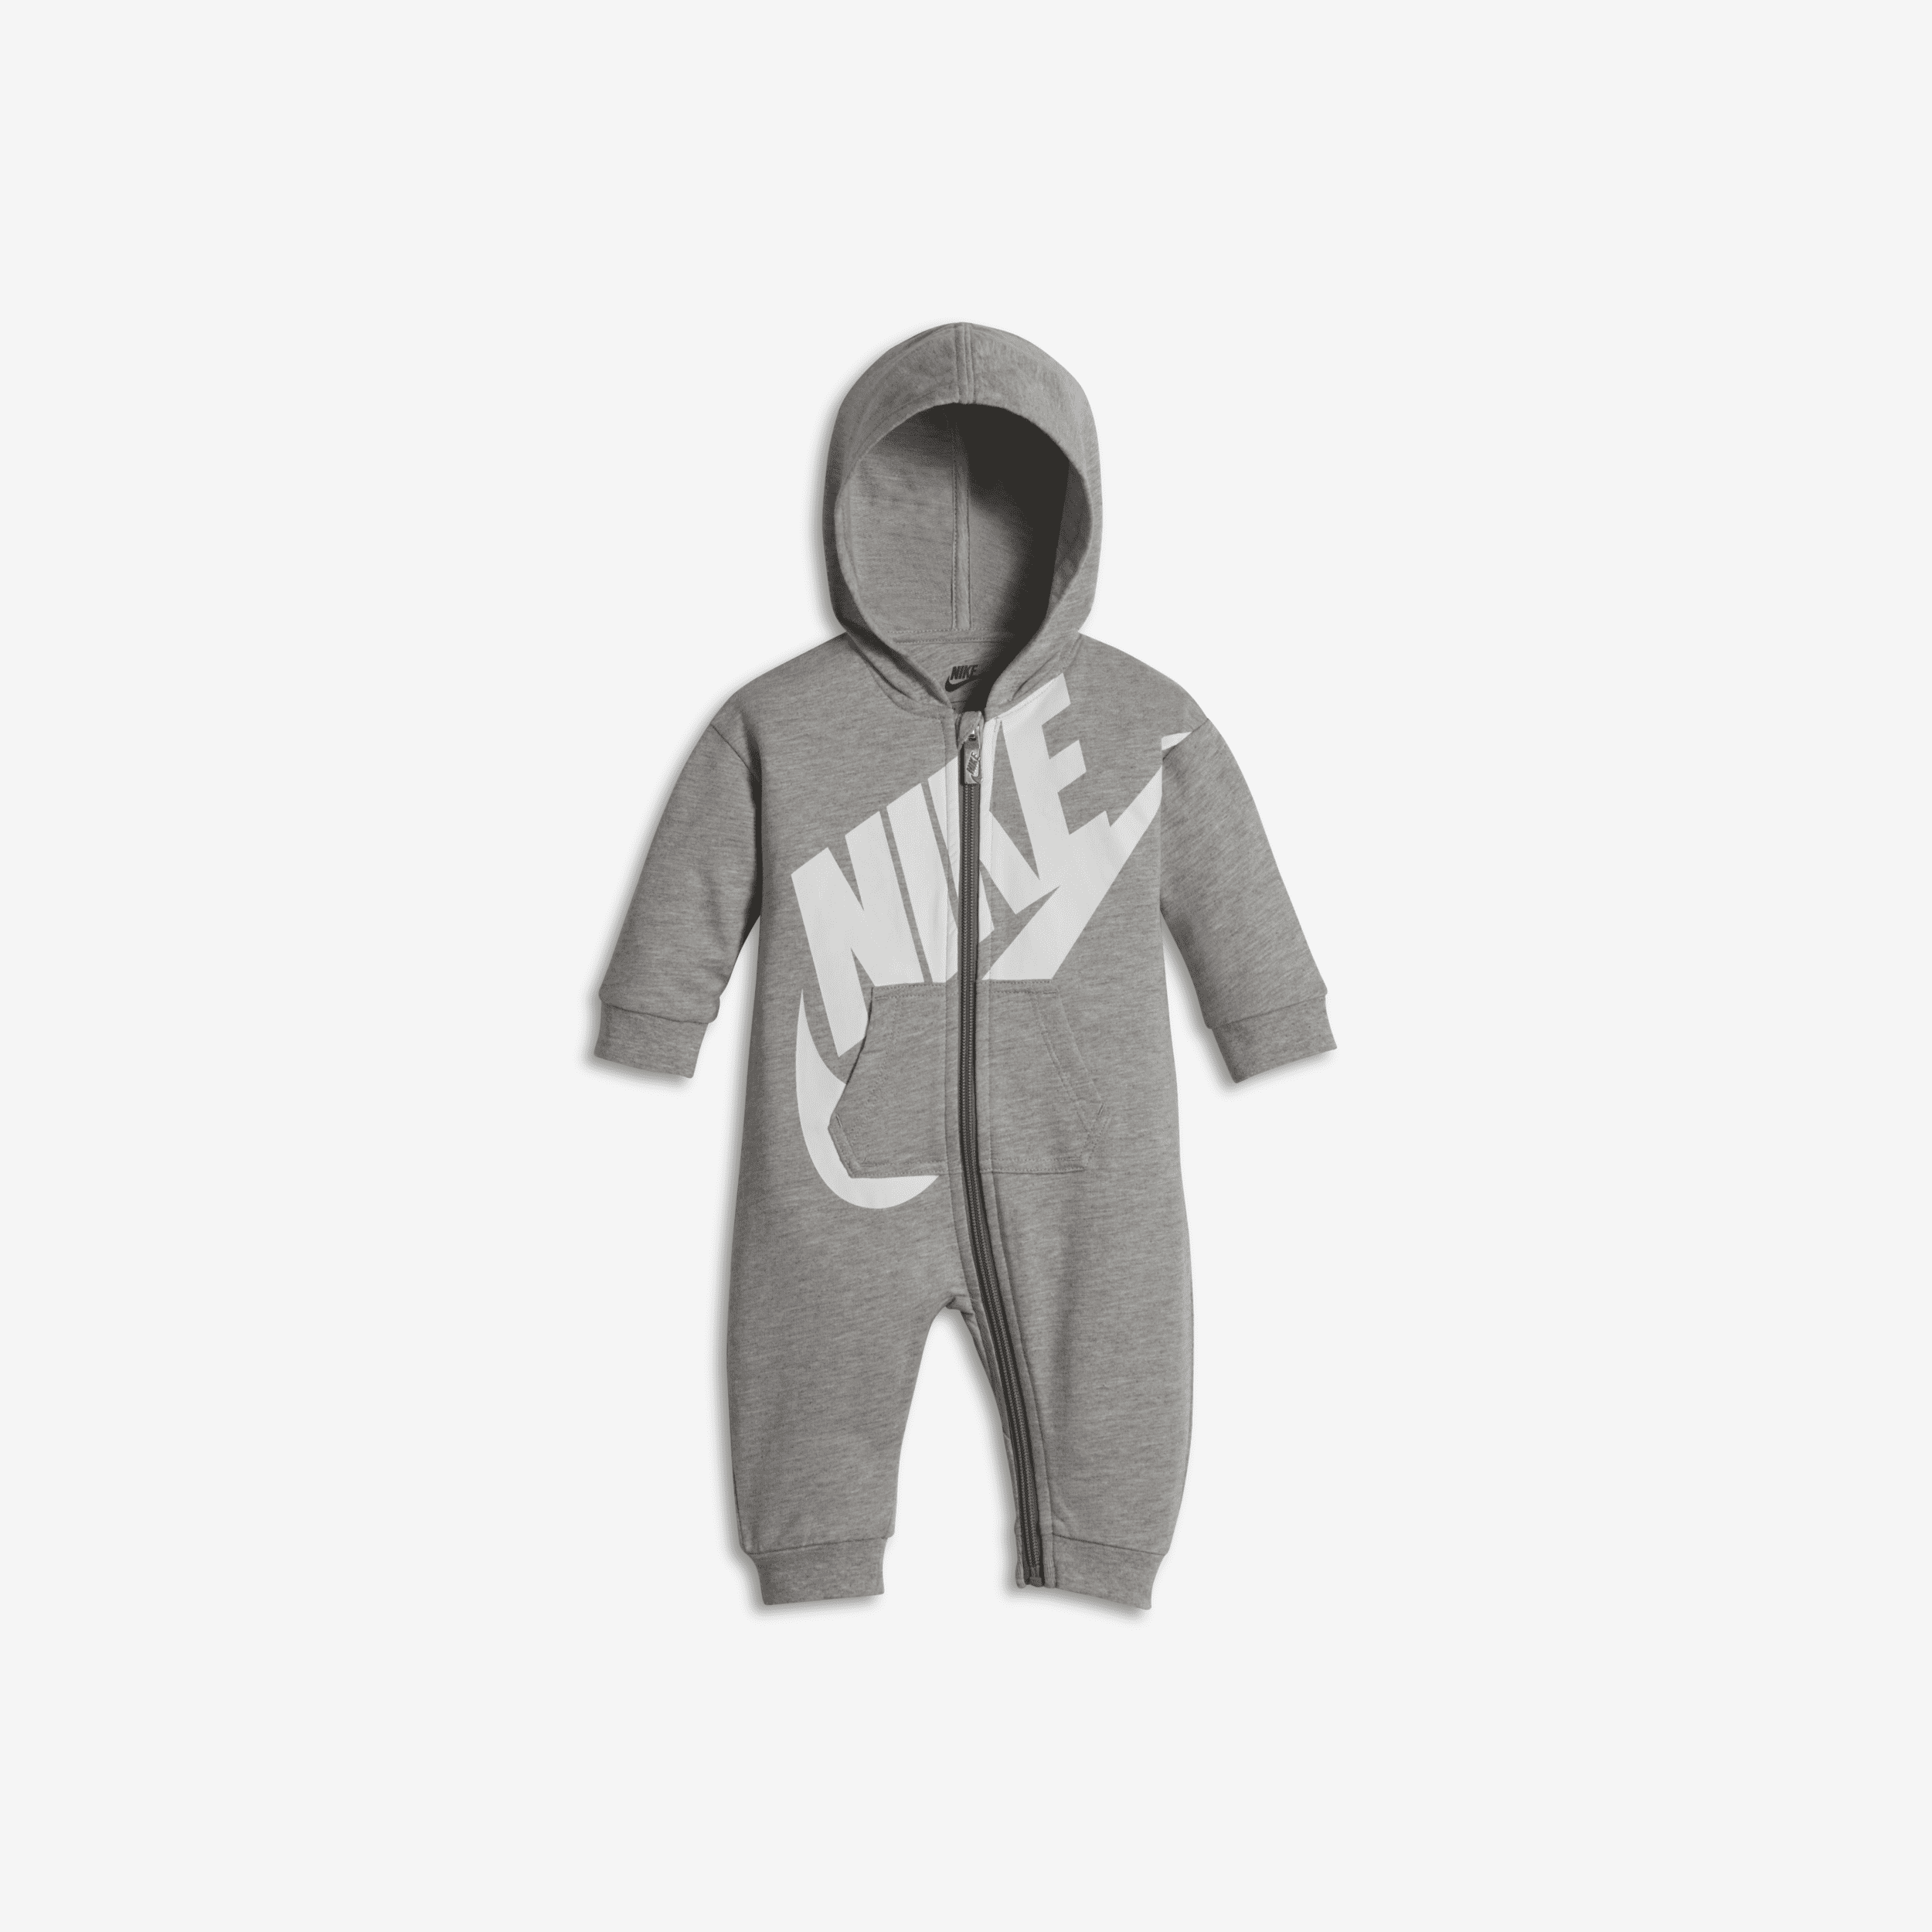 Nike Mono con cremallera completa - Bebé (0-9 M) - Gris